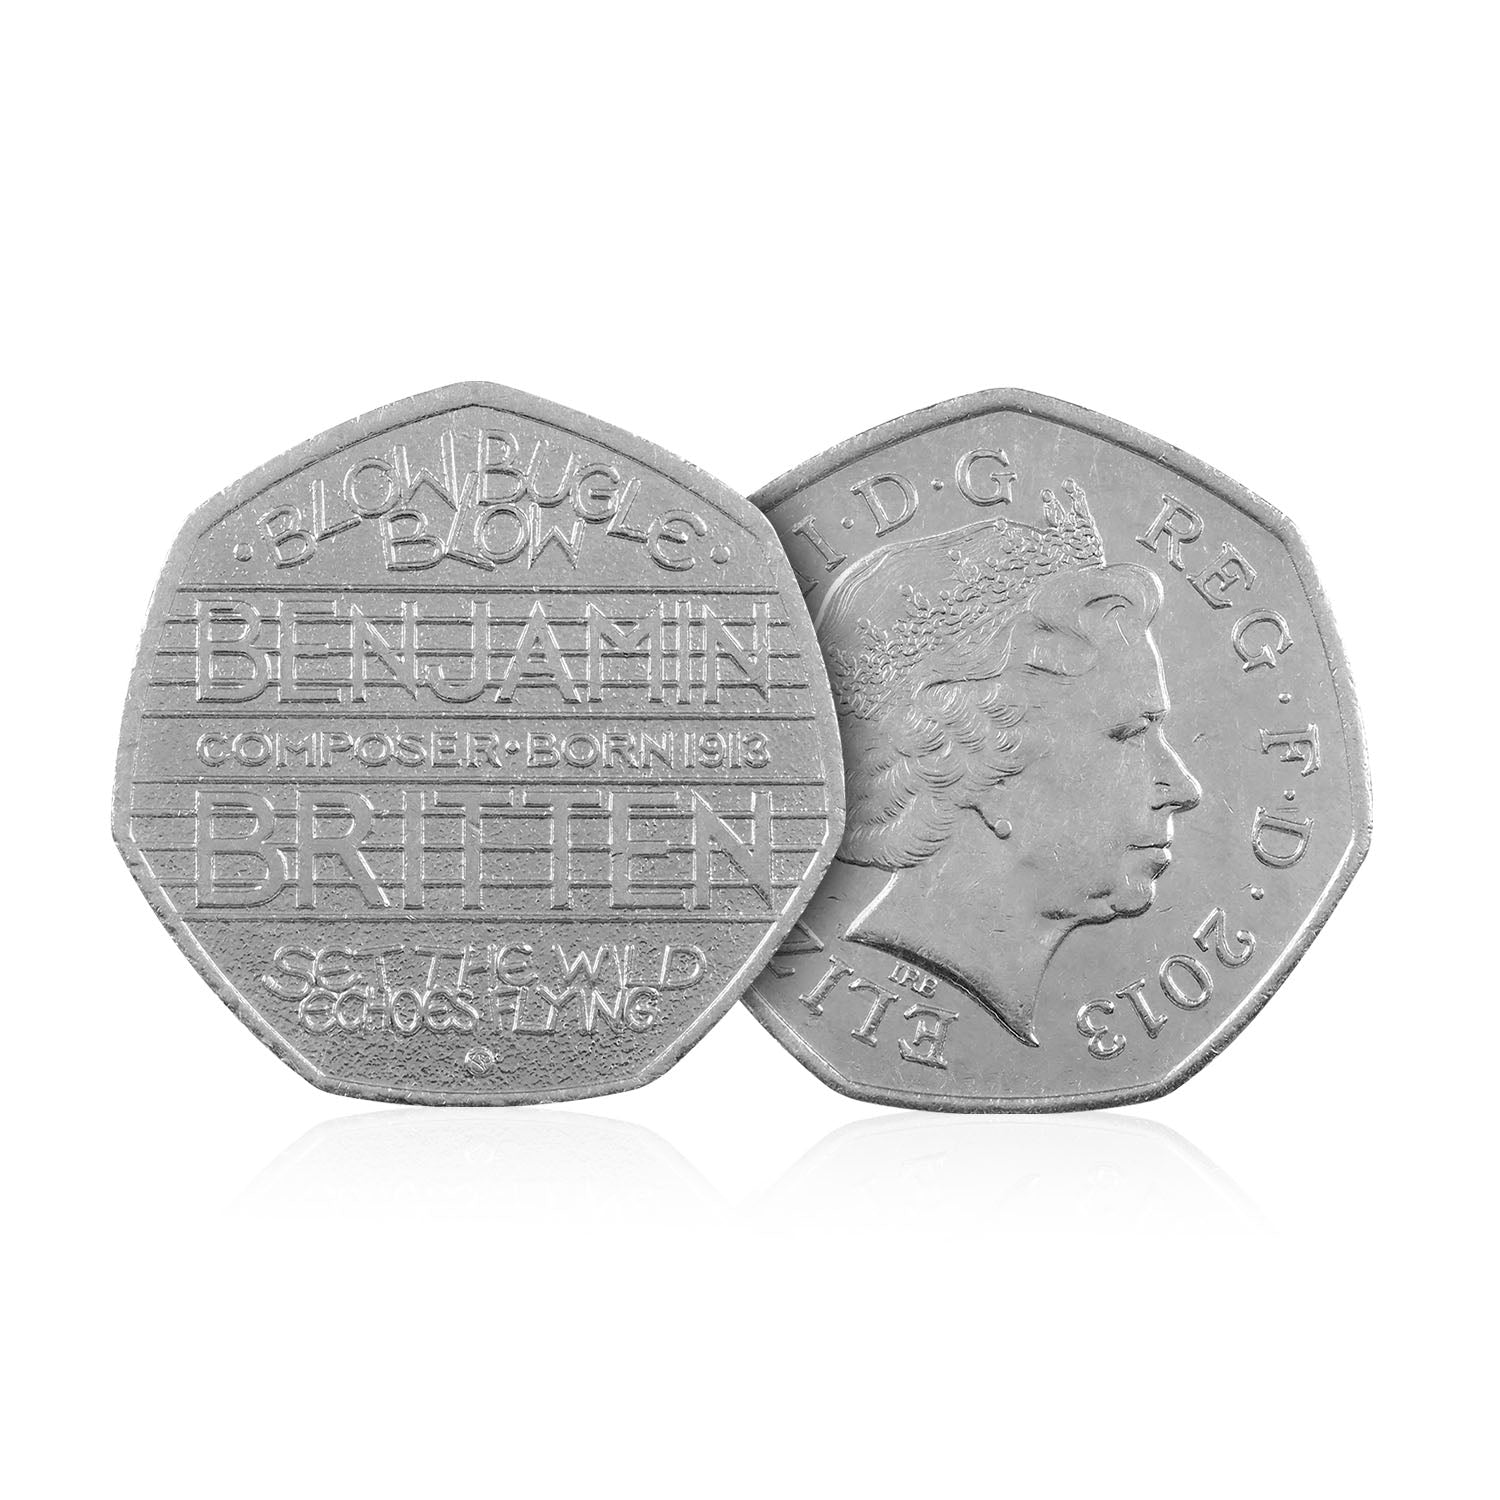 2013 Circulated Benjamin Britten 100th Anniversary 50p Coin